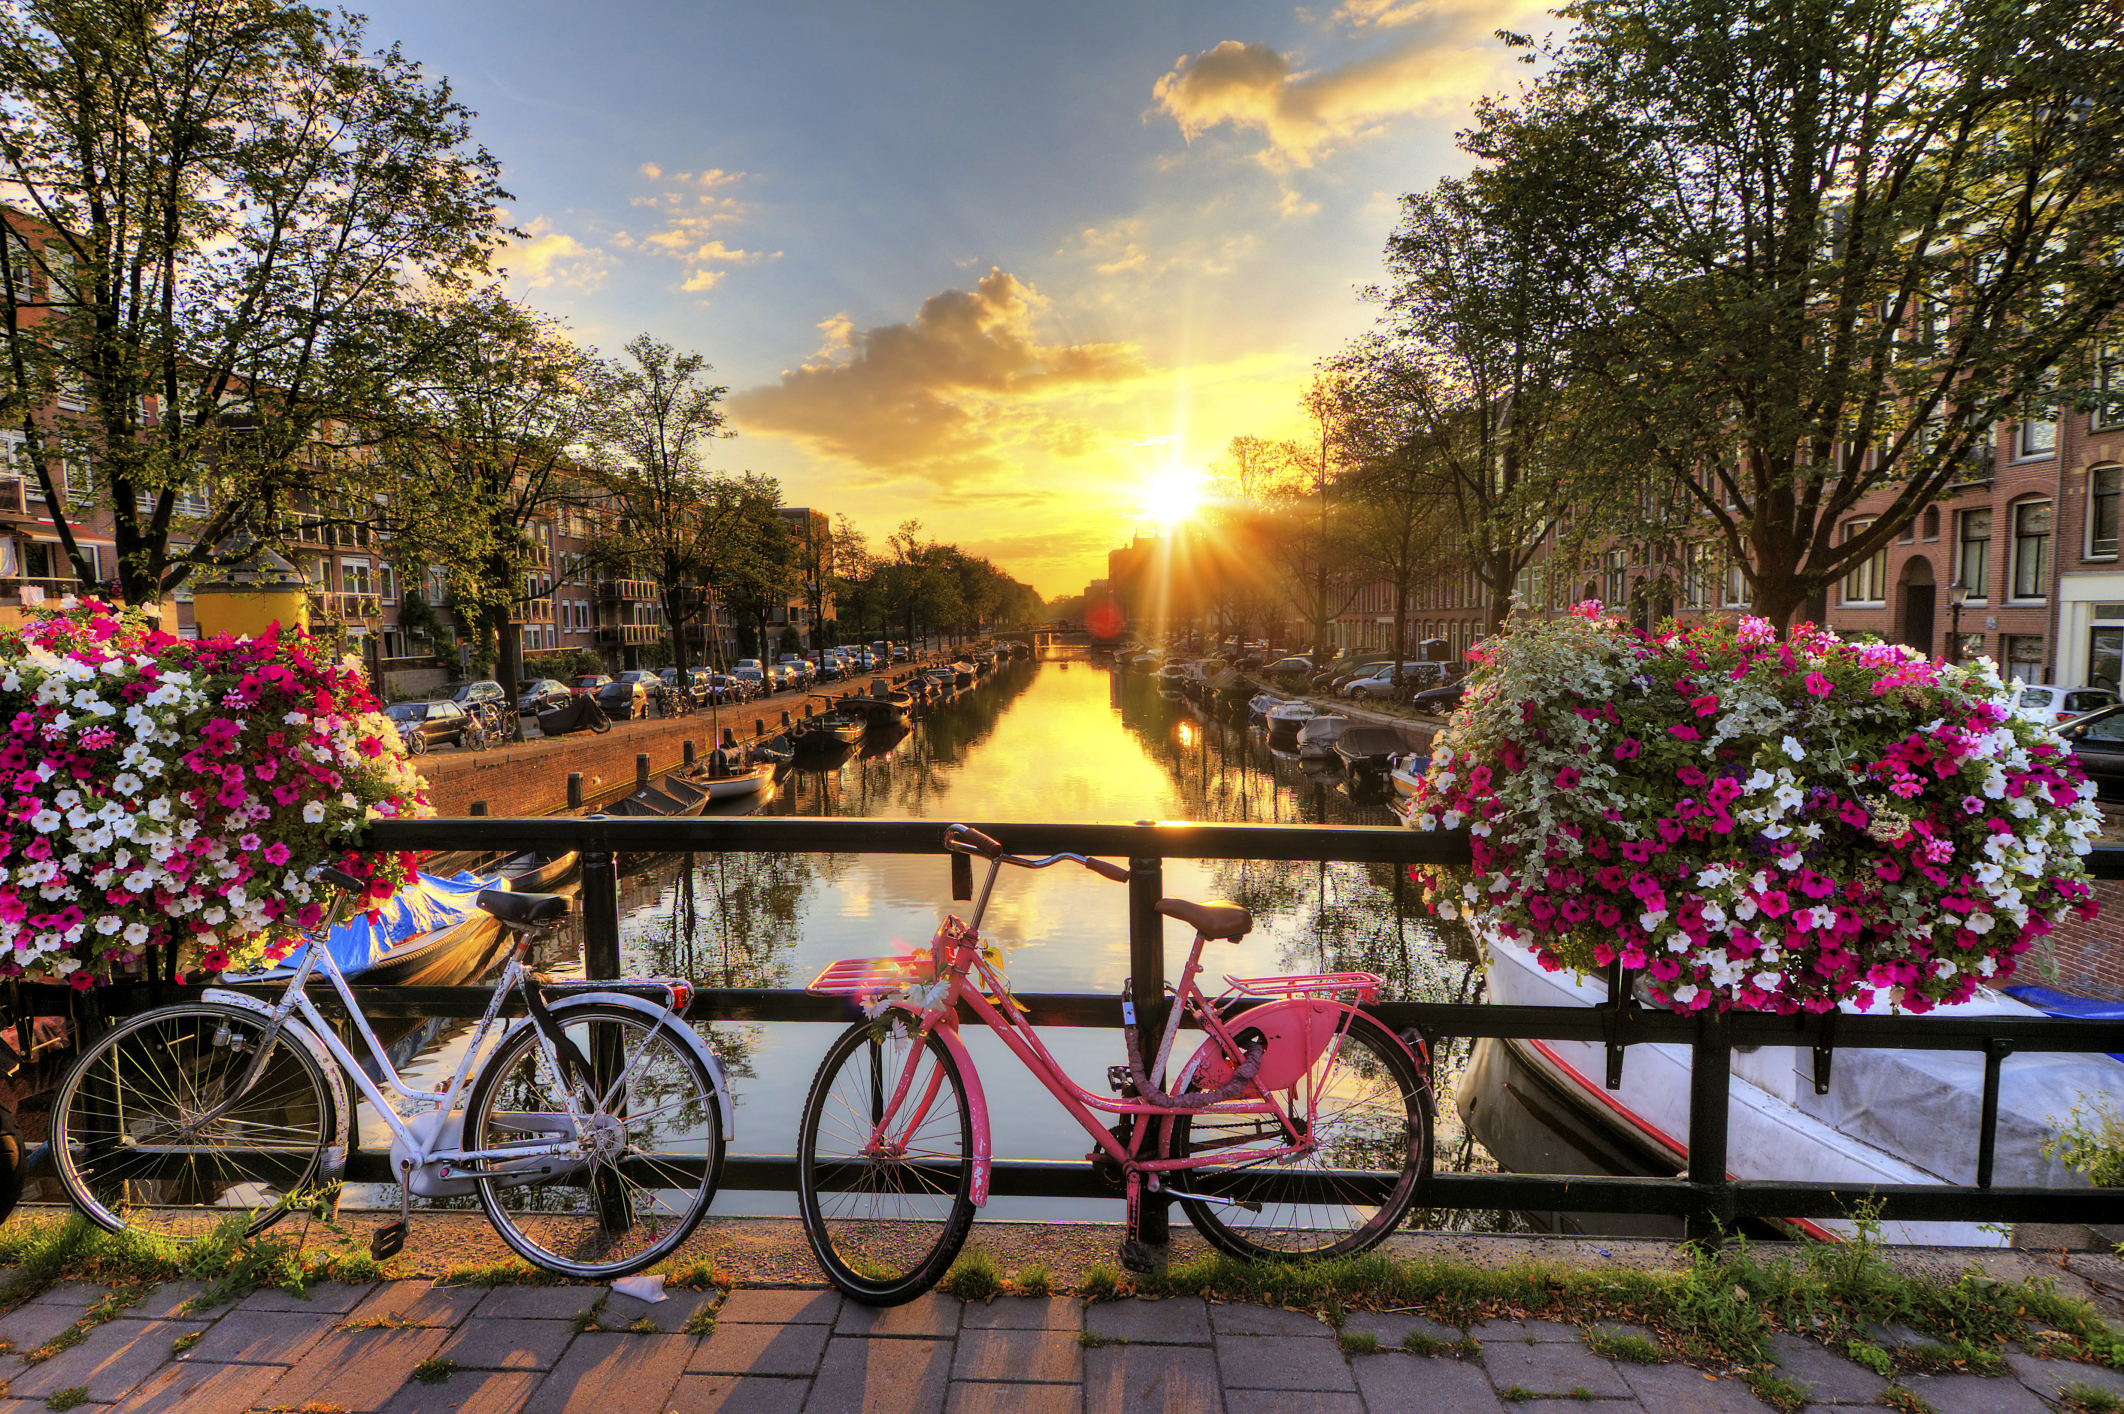 amsterdam-netherlands - StudentUniverse Travel Blog